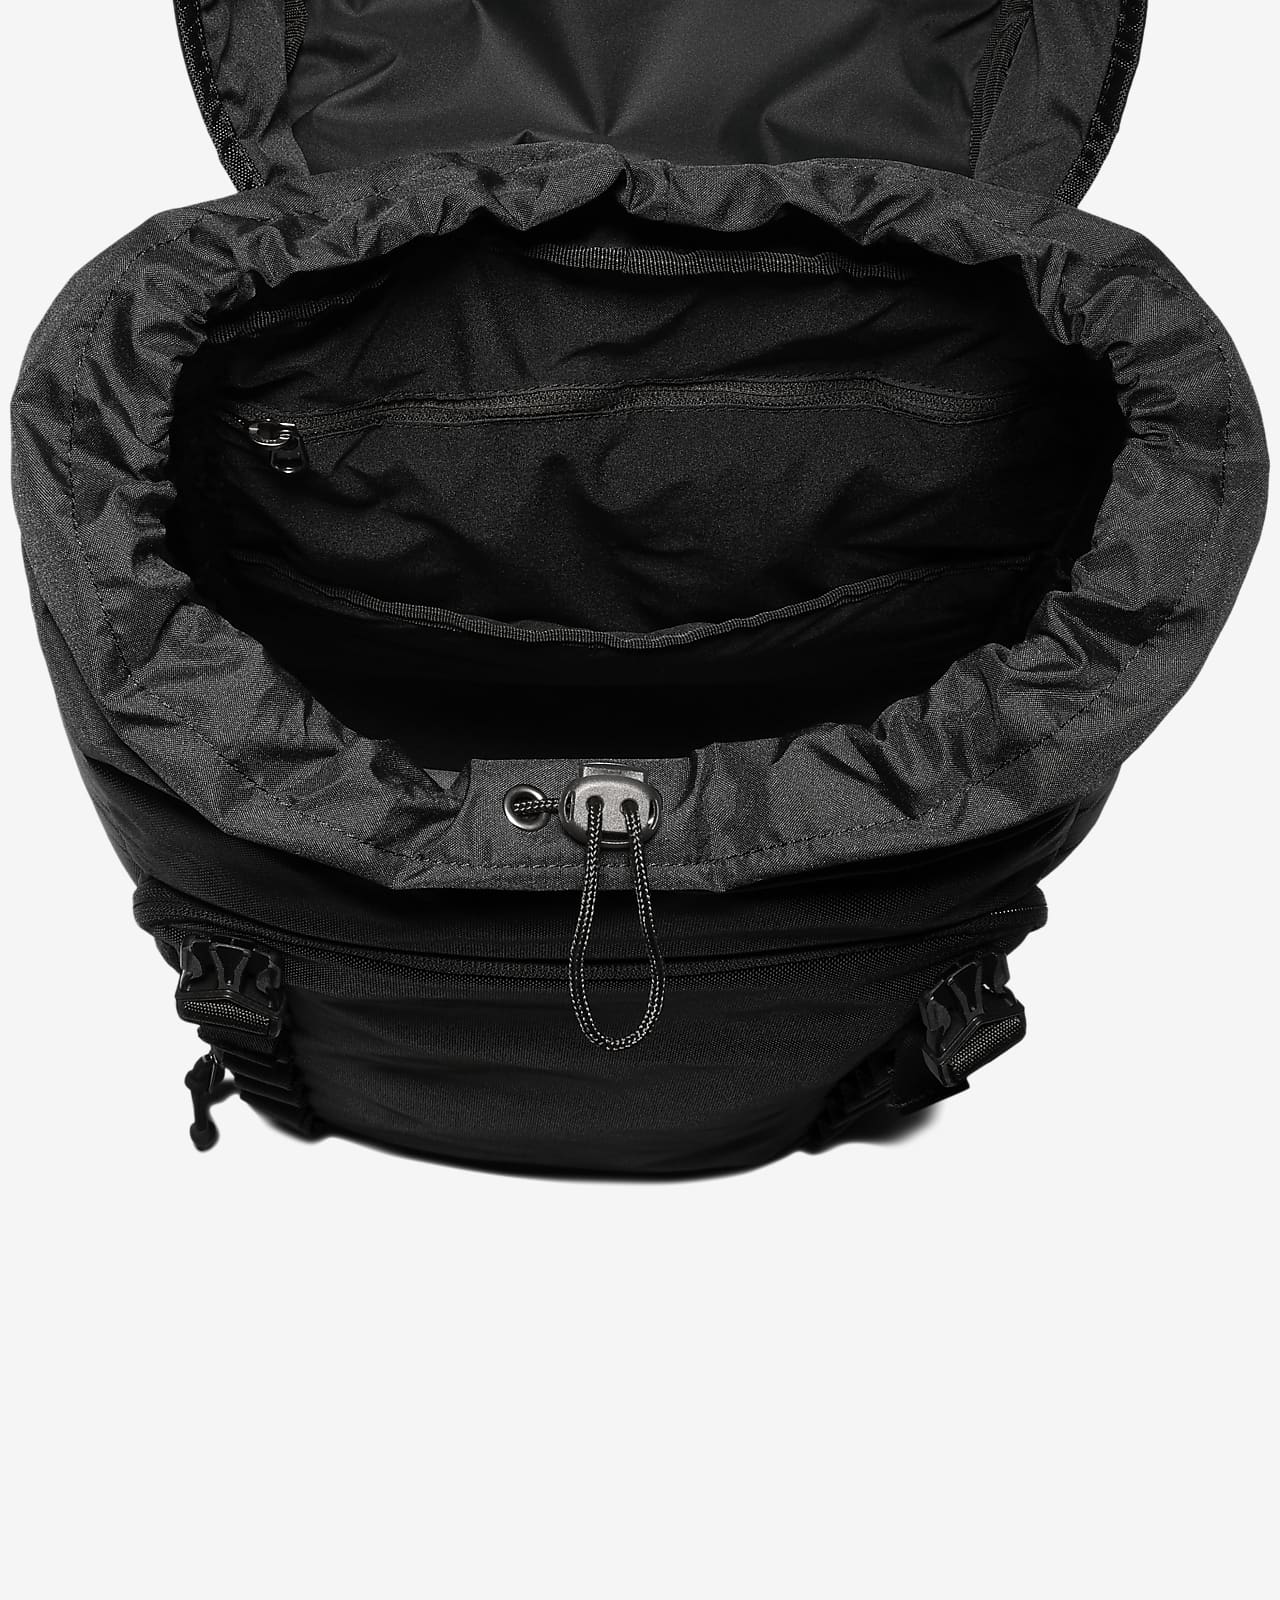 nike vapor speed 2.0 backpack size